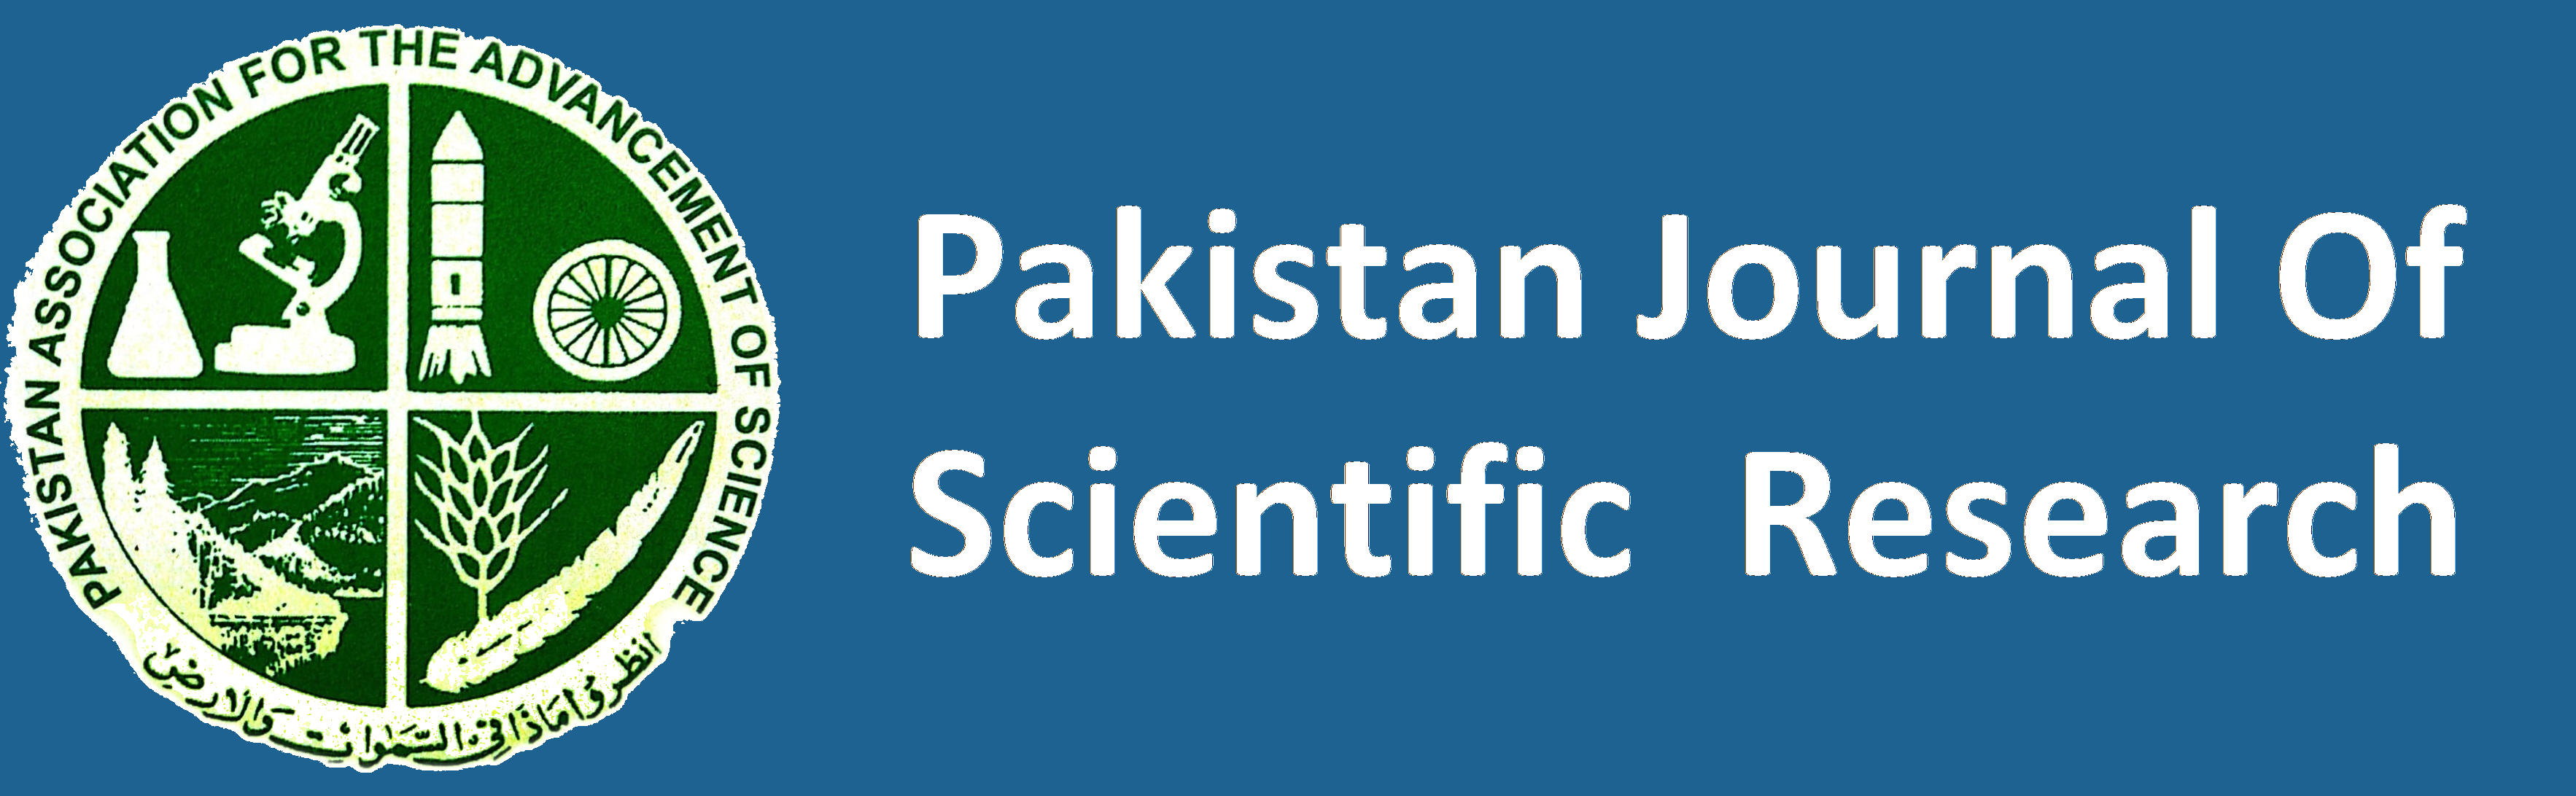 					View Vol. 1 No. 2 (2021): Pakistan Journal of Scientific Research
				